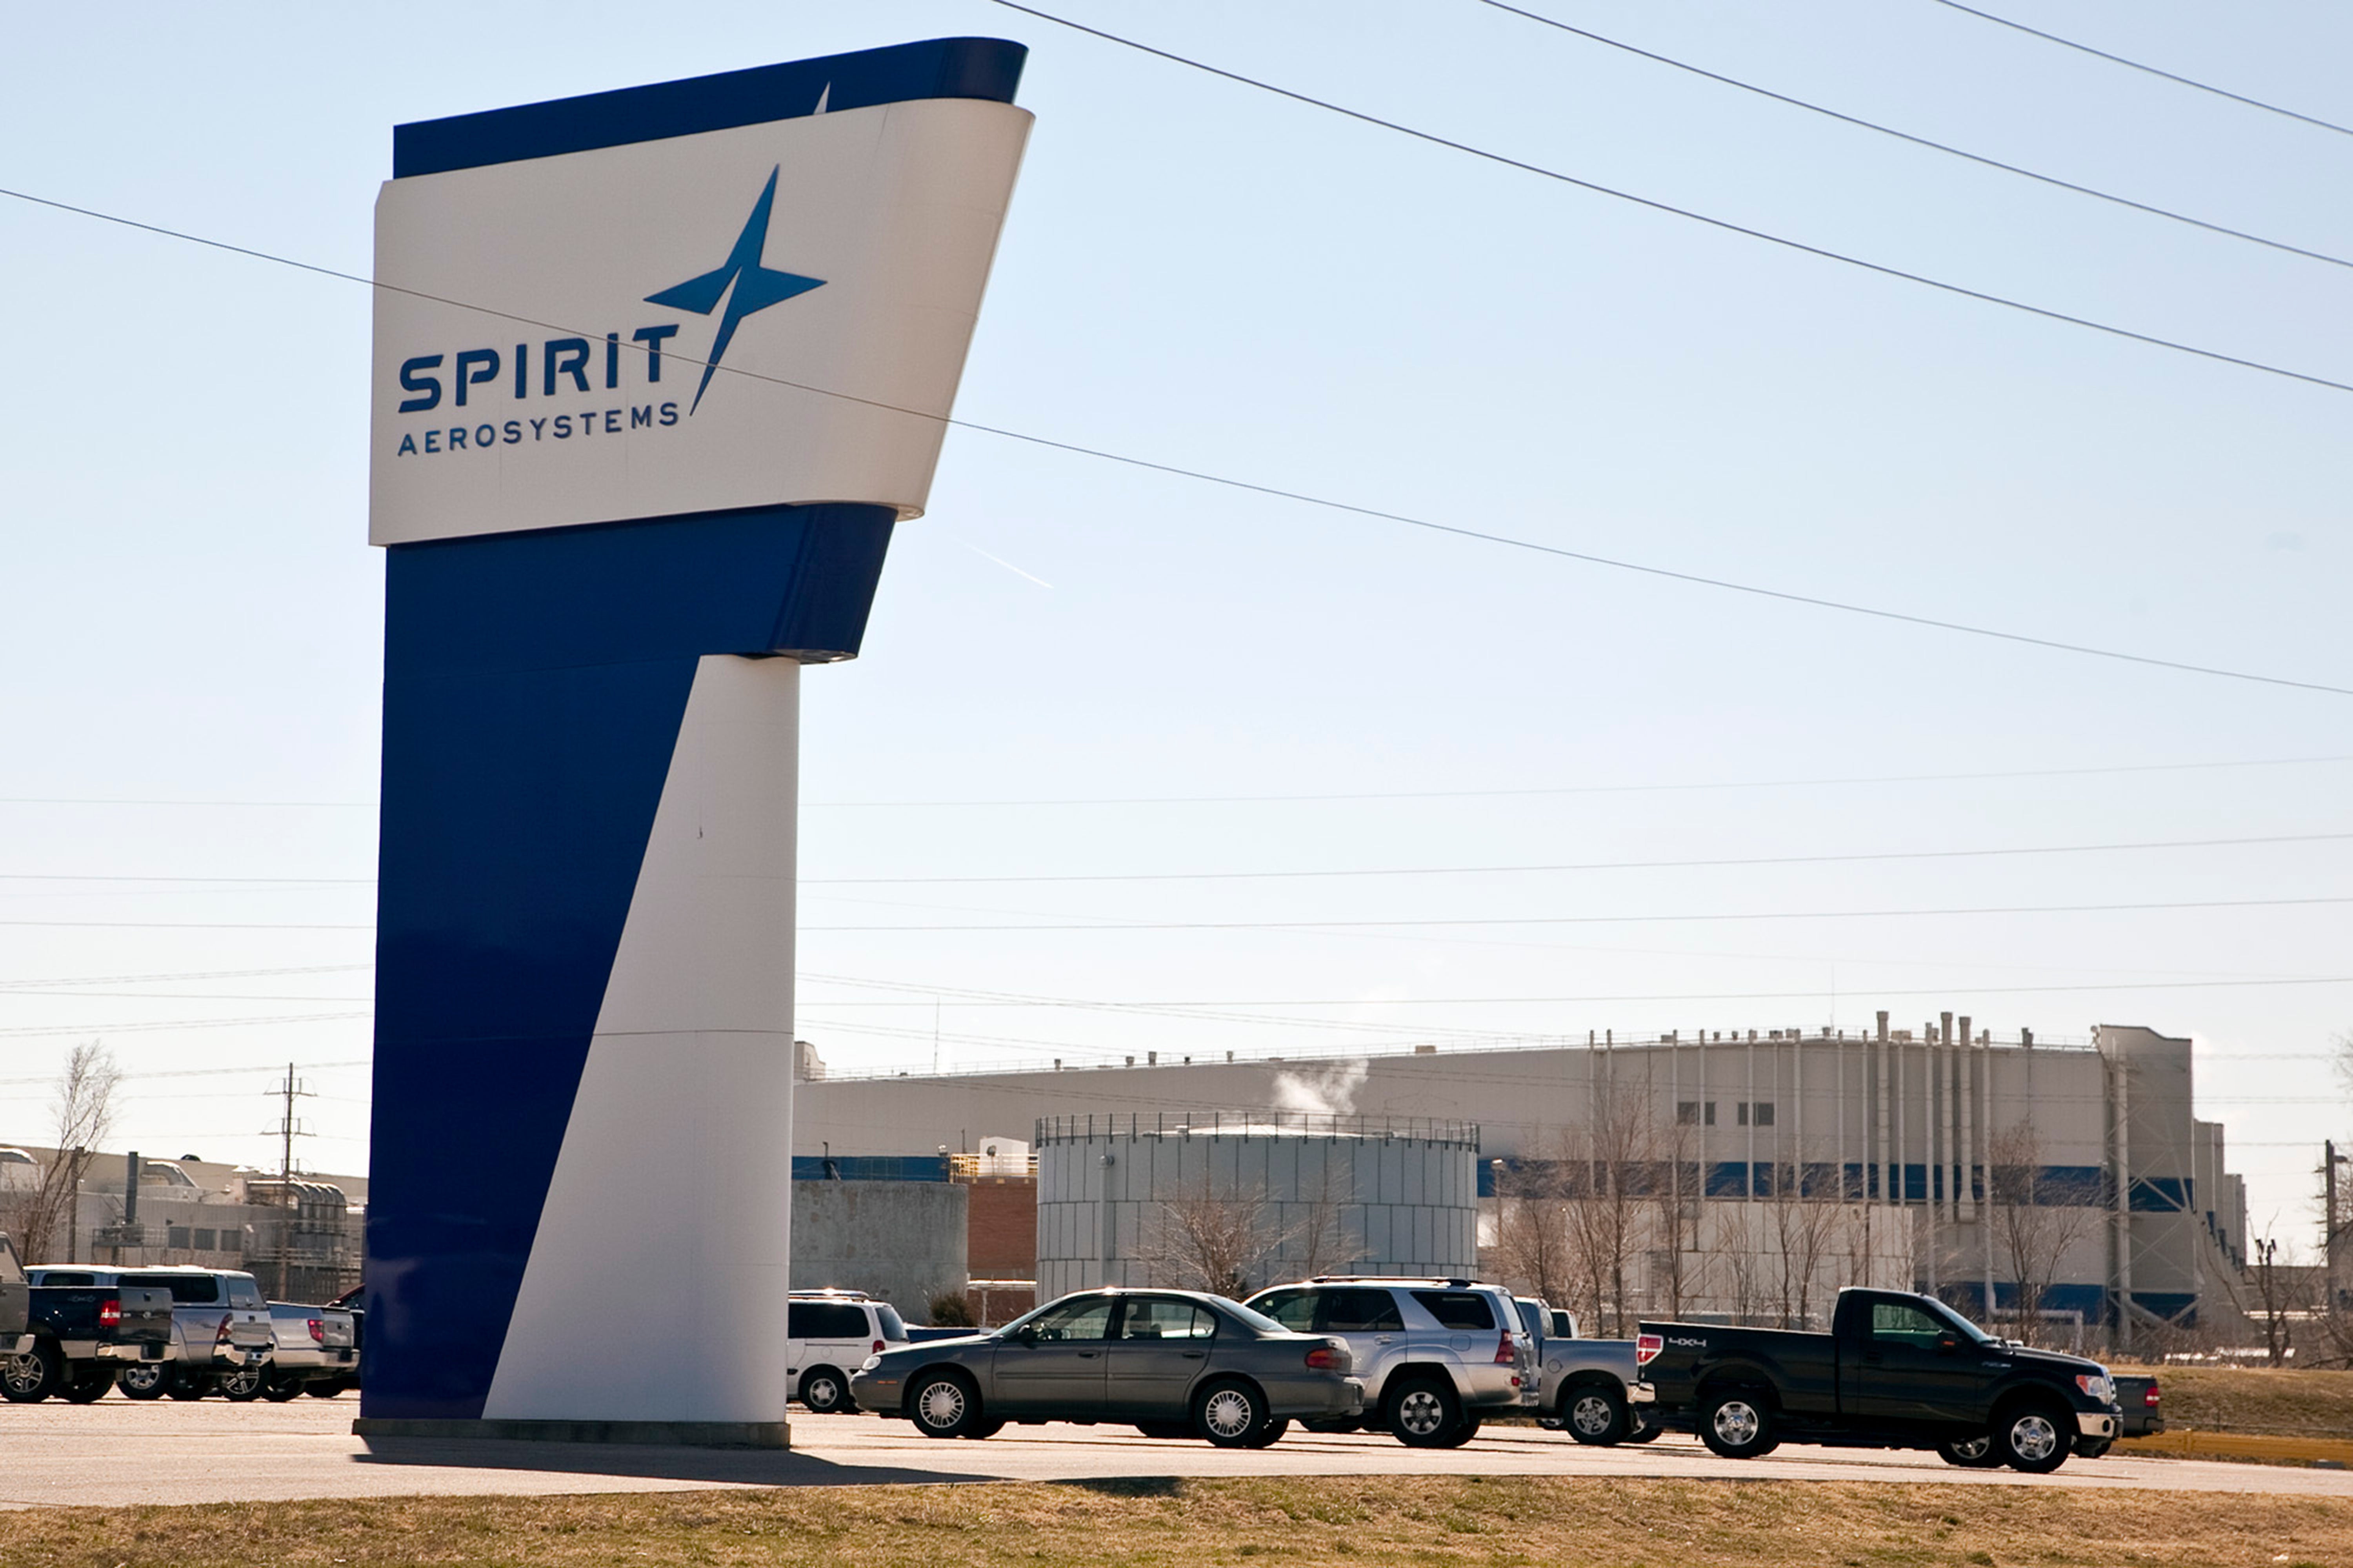 The Spirit AeroSystems sign is seen, July 25, 2013, in Wichita, Kansas